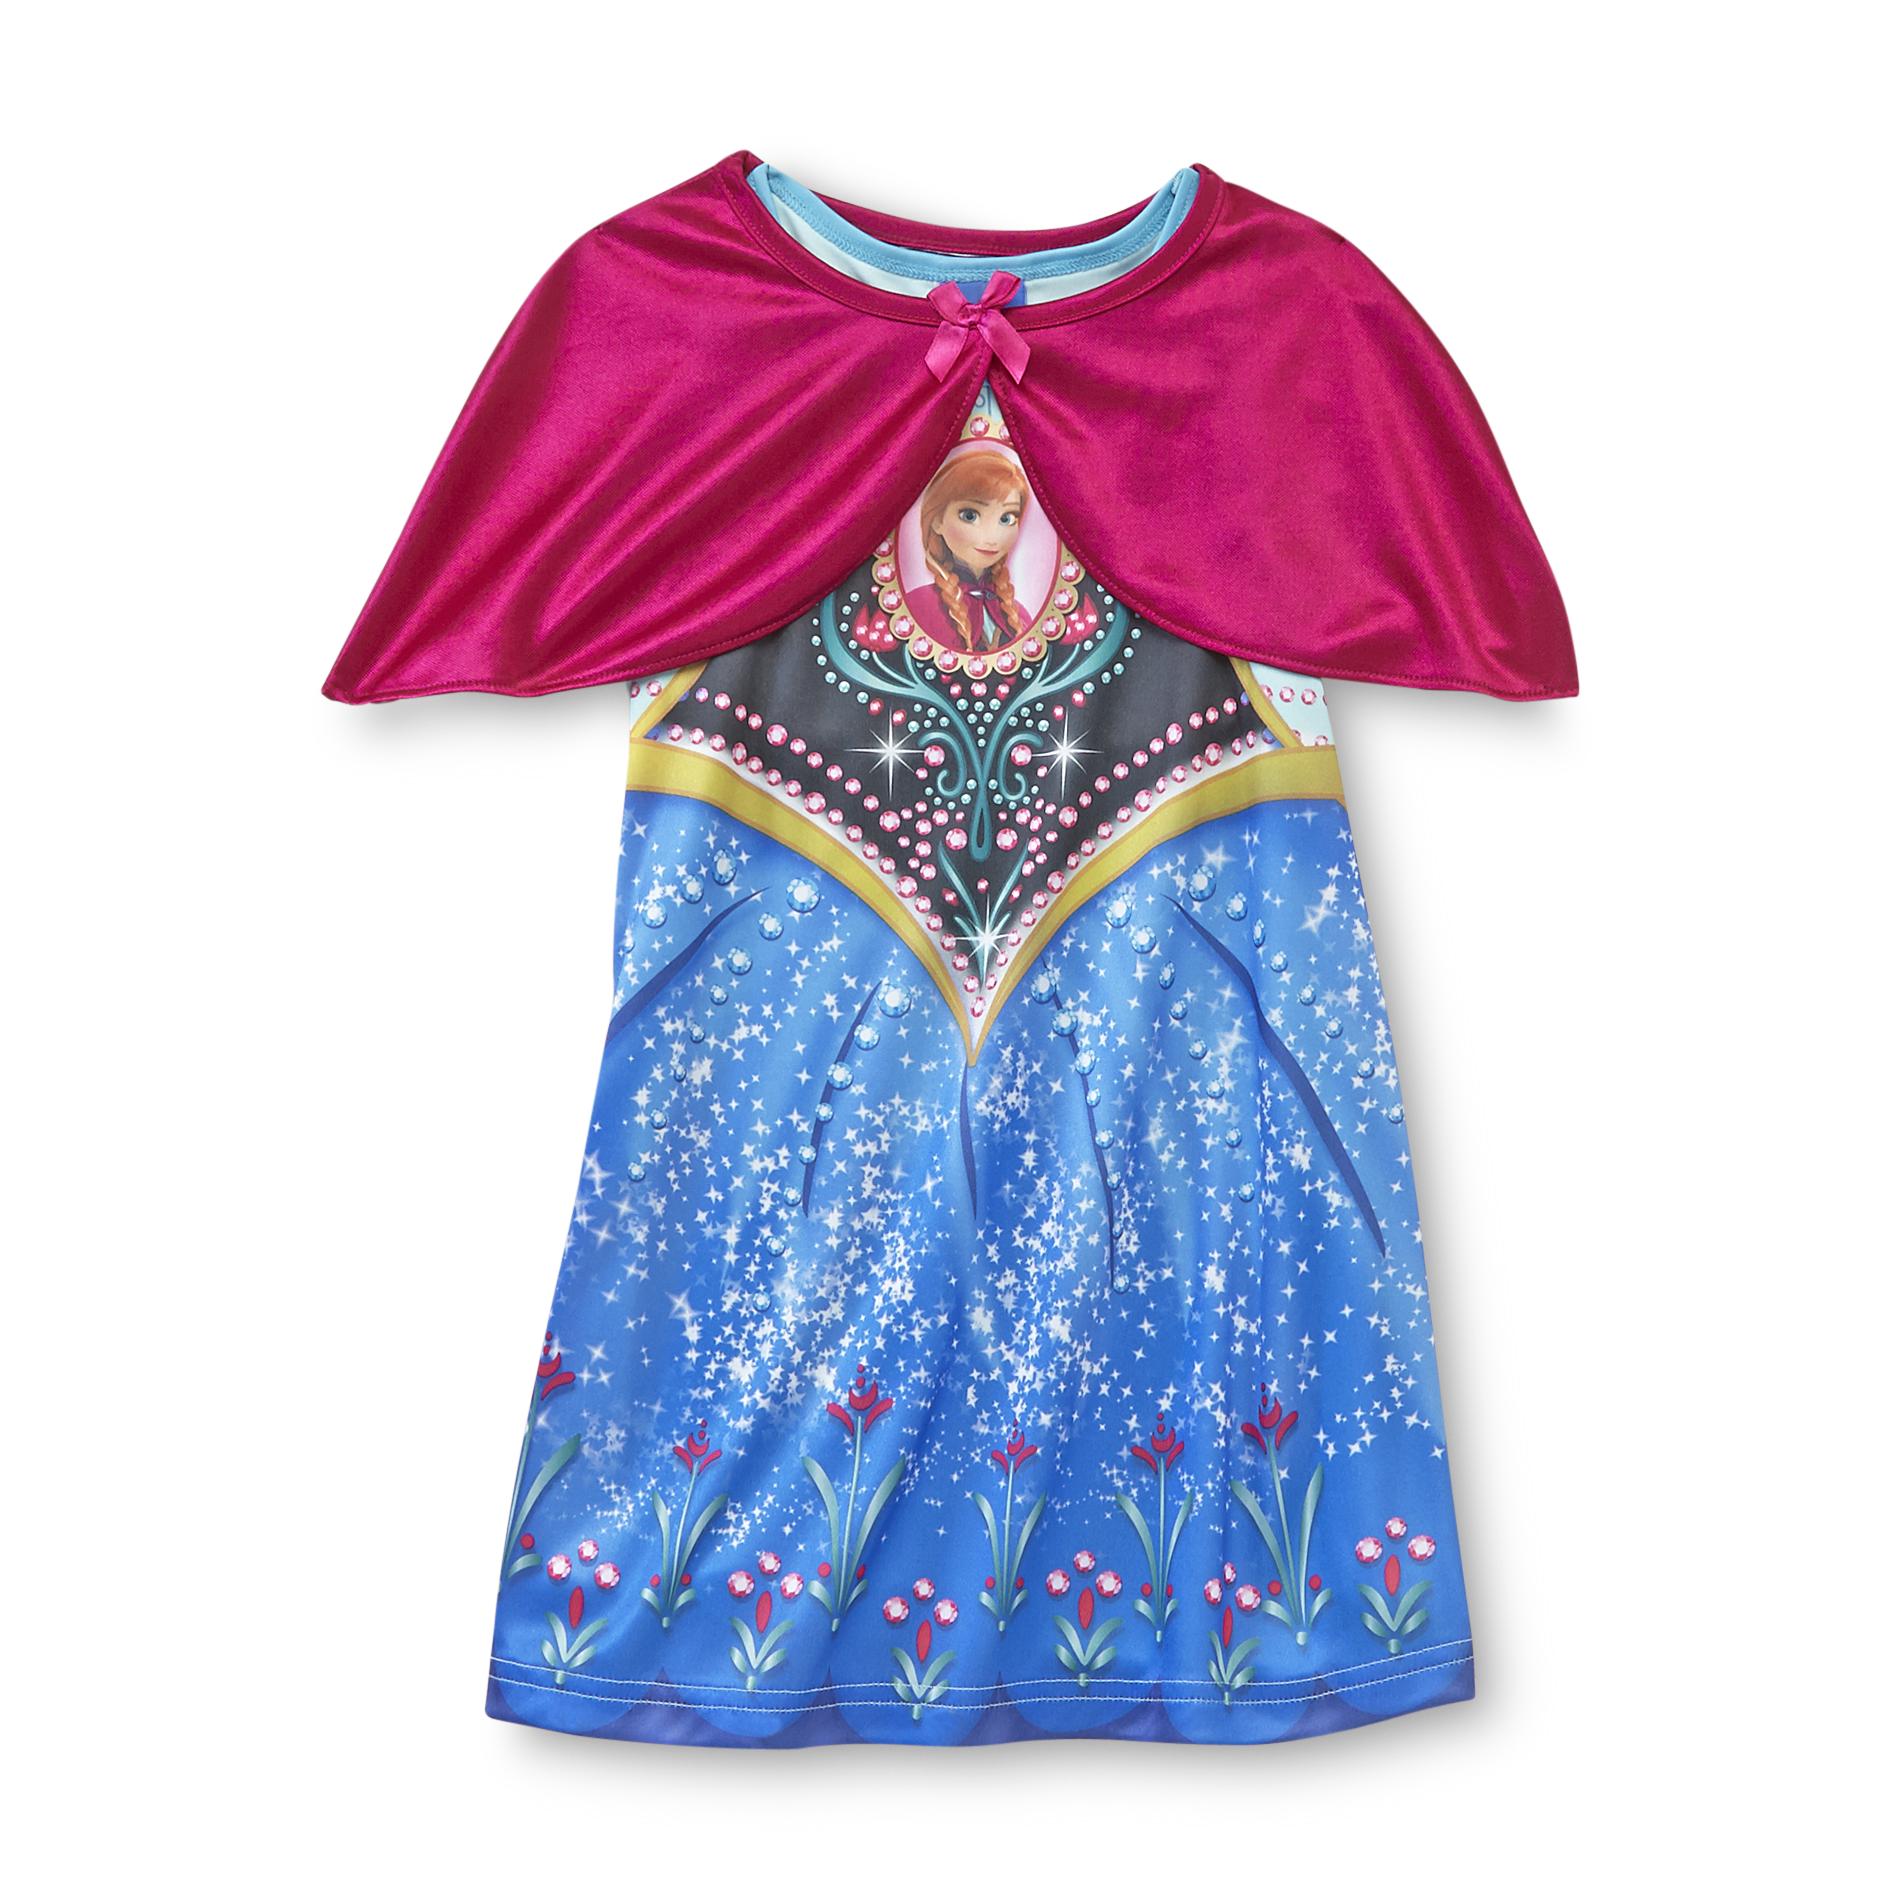 Disney Frozen Toddler Girl's Nightgown & Capelet - Elsa